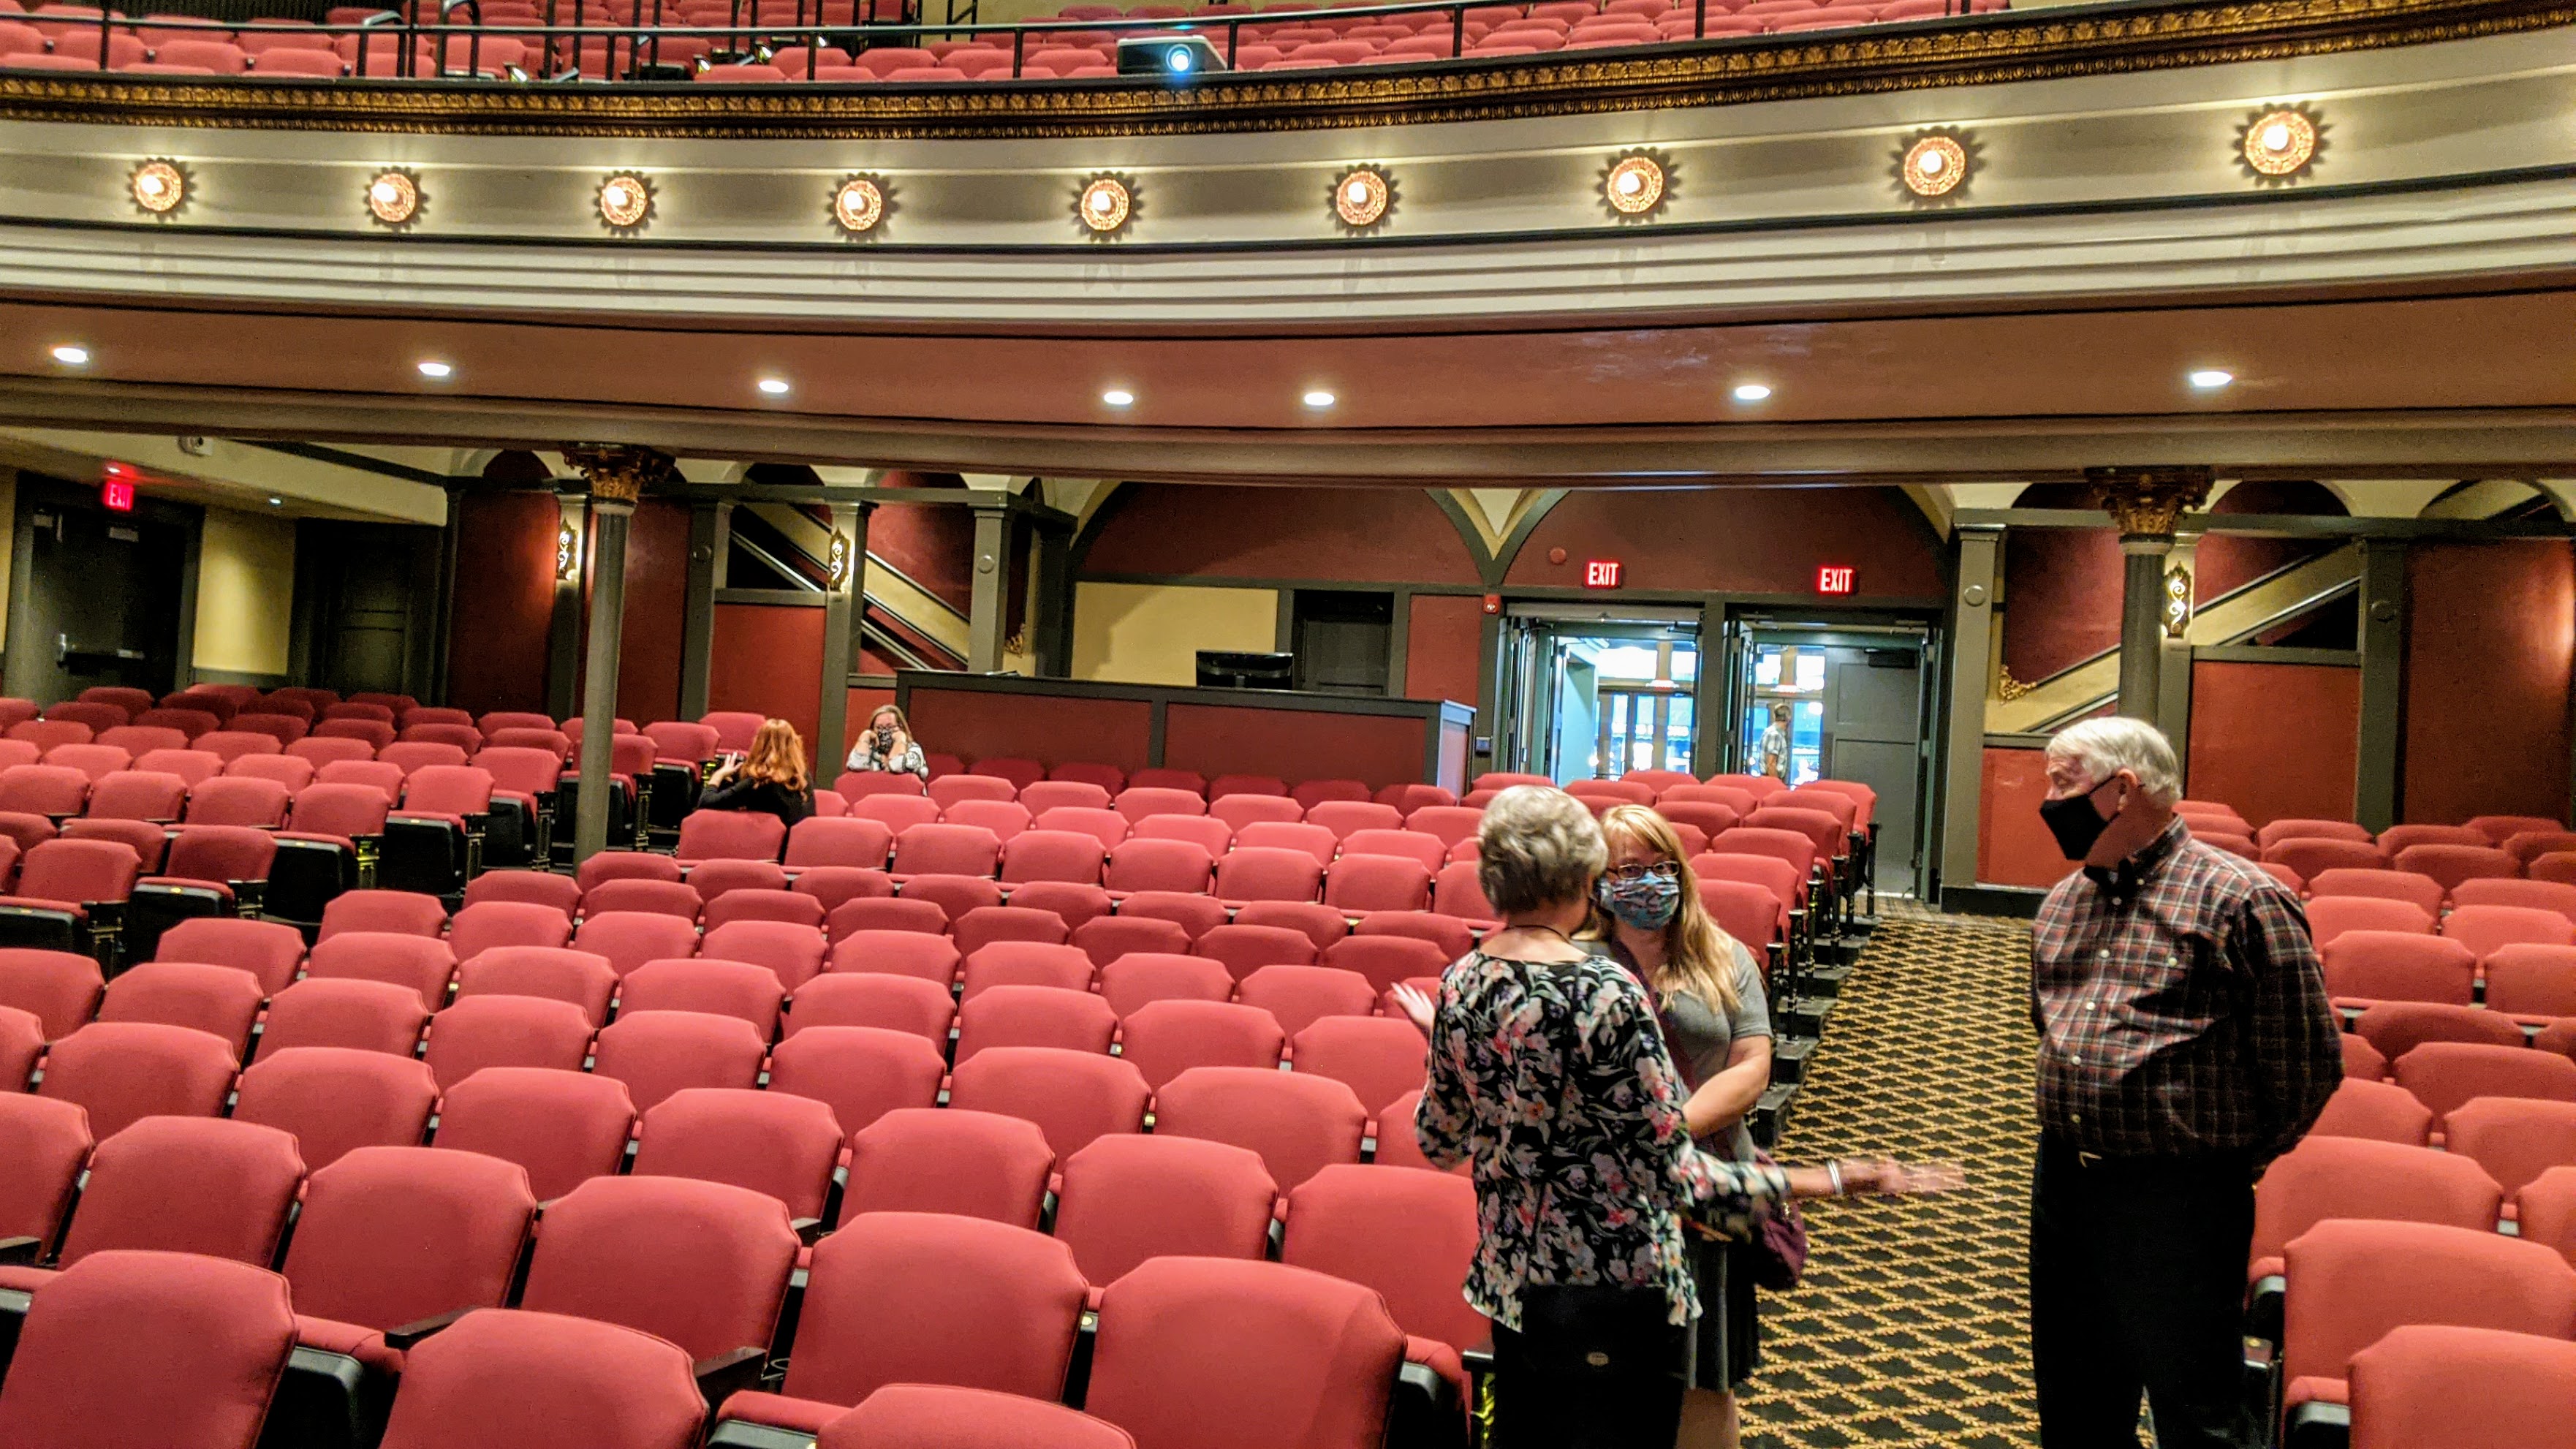 Restored Goshen Theater will add magic to new events